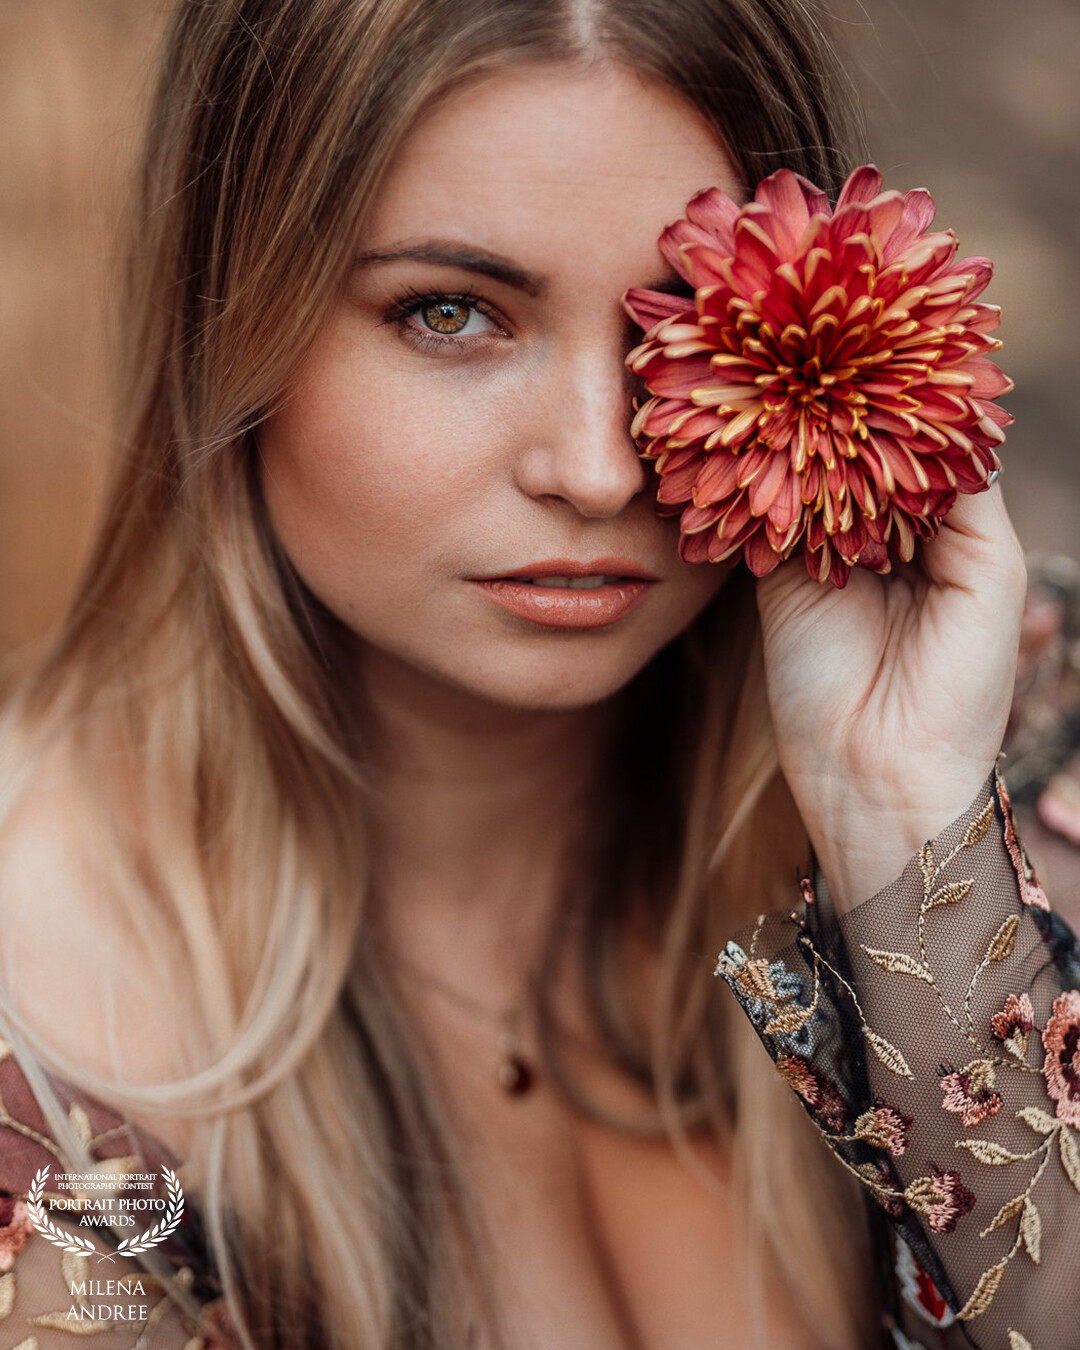 Flower girl. <br />
<br />
Photographer: @photogravity_milenaart<br />
Model: @leamartha27